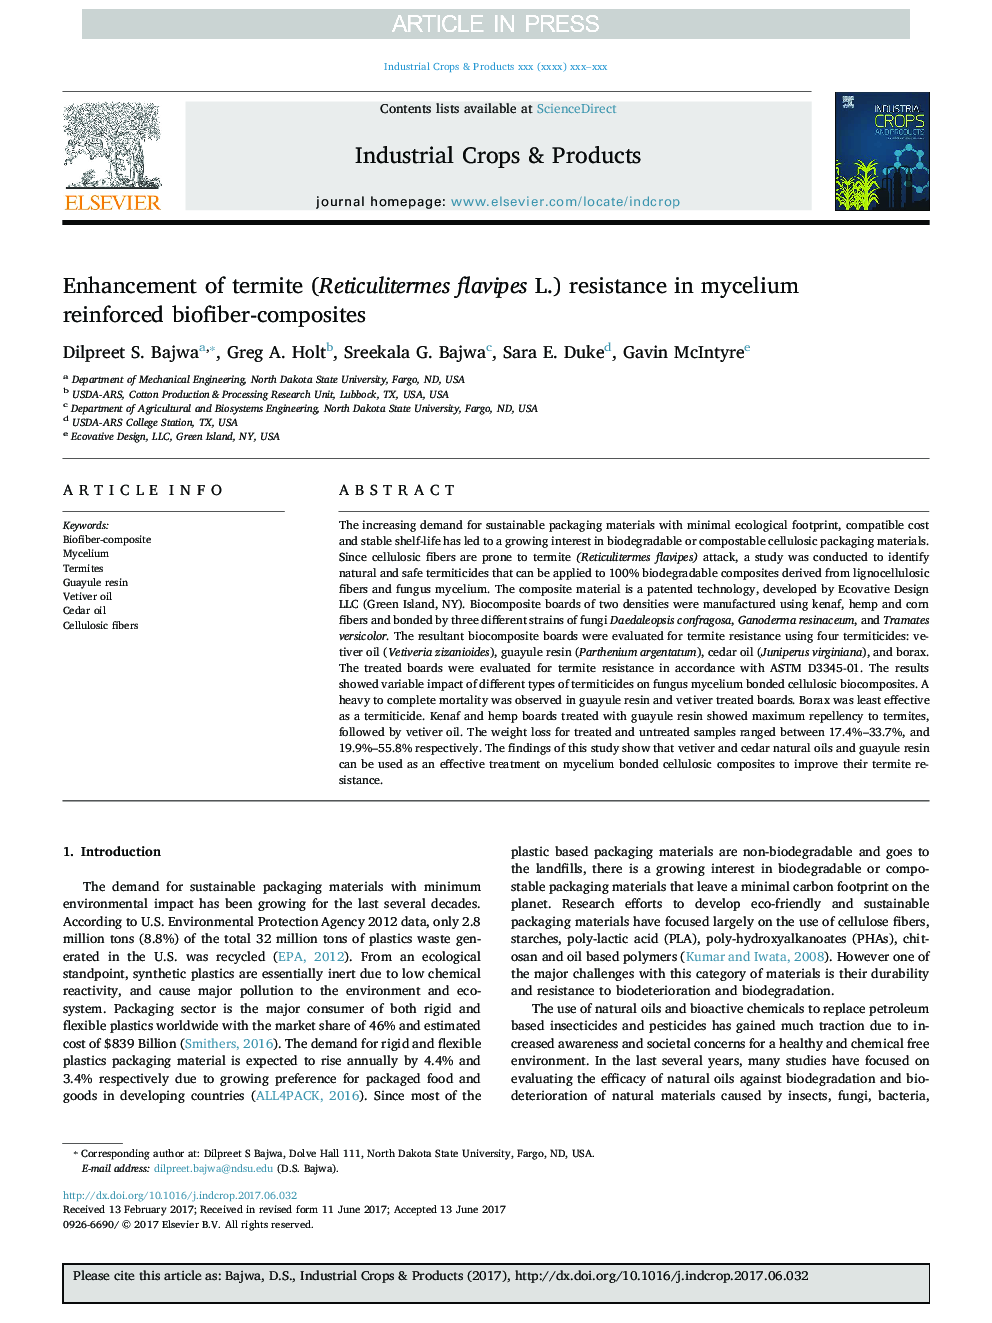 Enhancement of termite (Reticulitermes flavipes L.) resistance in mycelium reinforced biofiber-composites